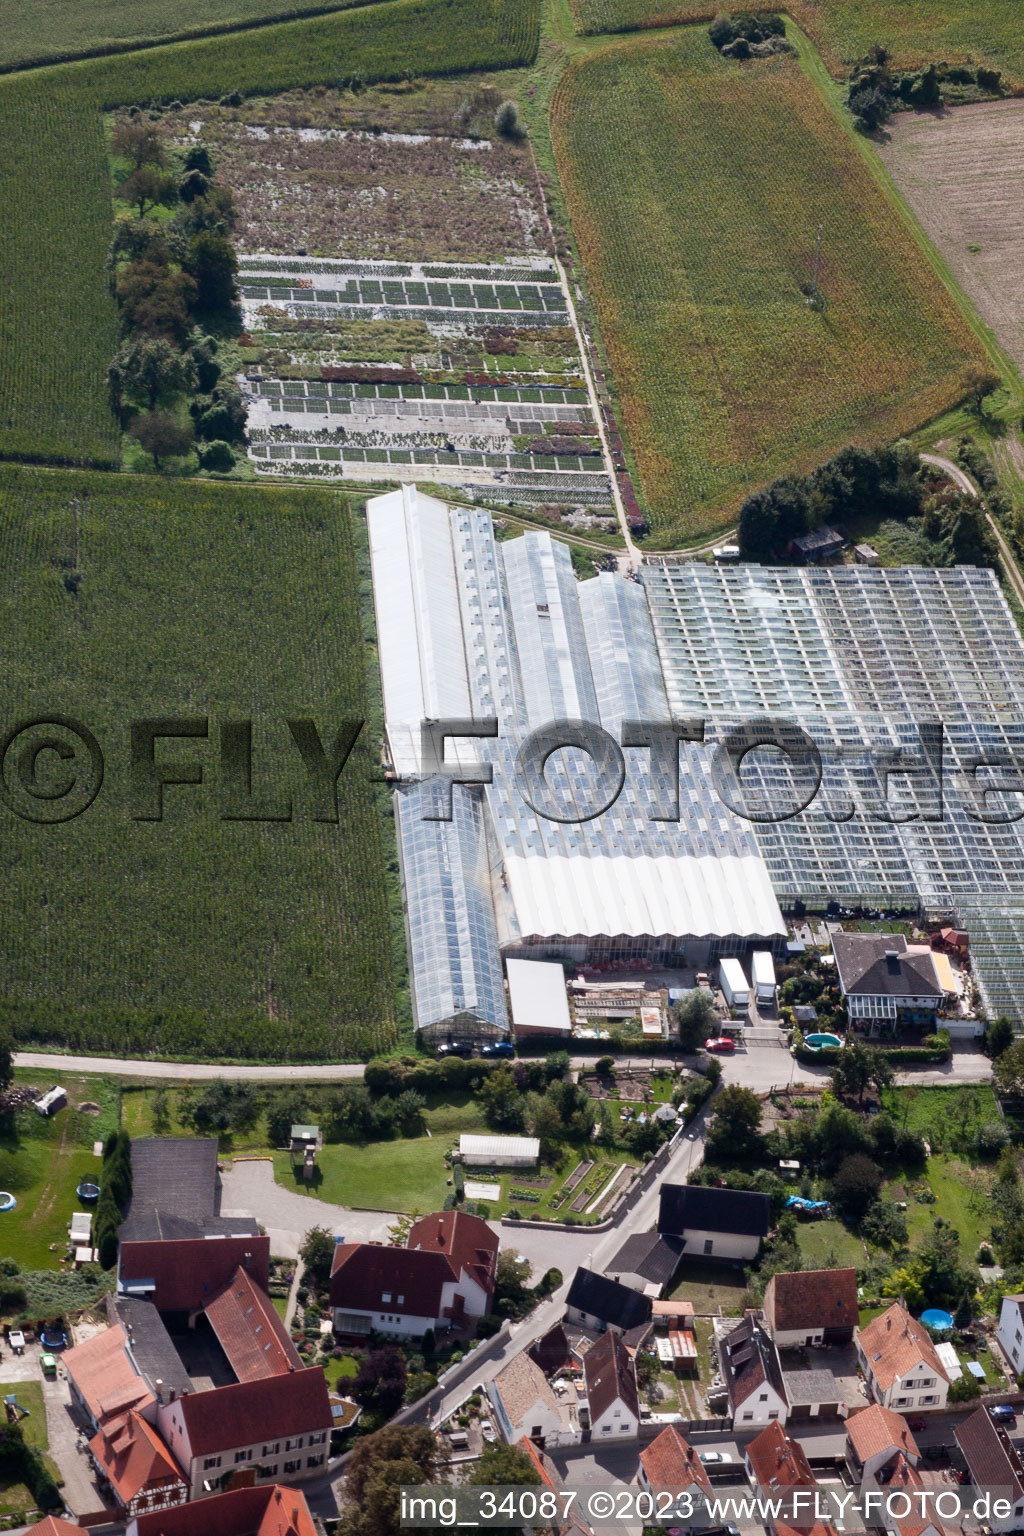 Aerial view of Gardening on Ziegelstr in the district Sondernheim in Germersheim in the state Rhineland-Palatinate, Germany